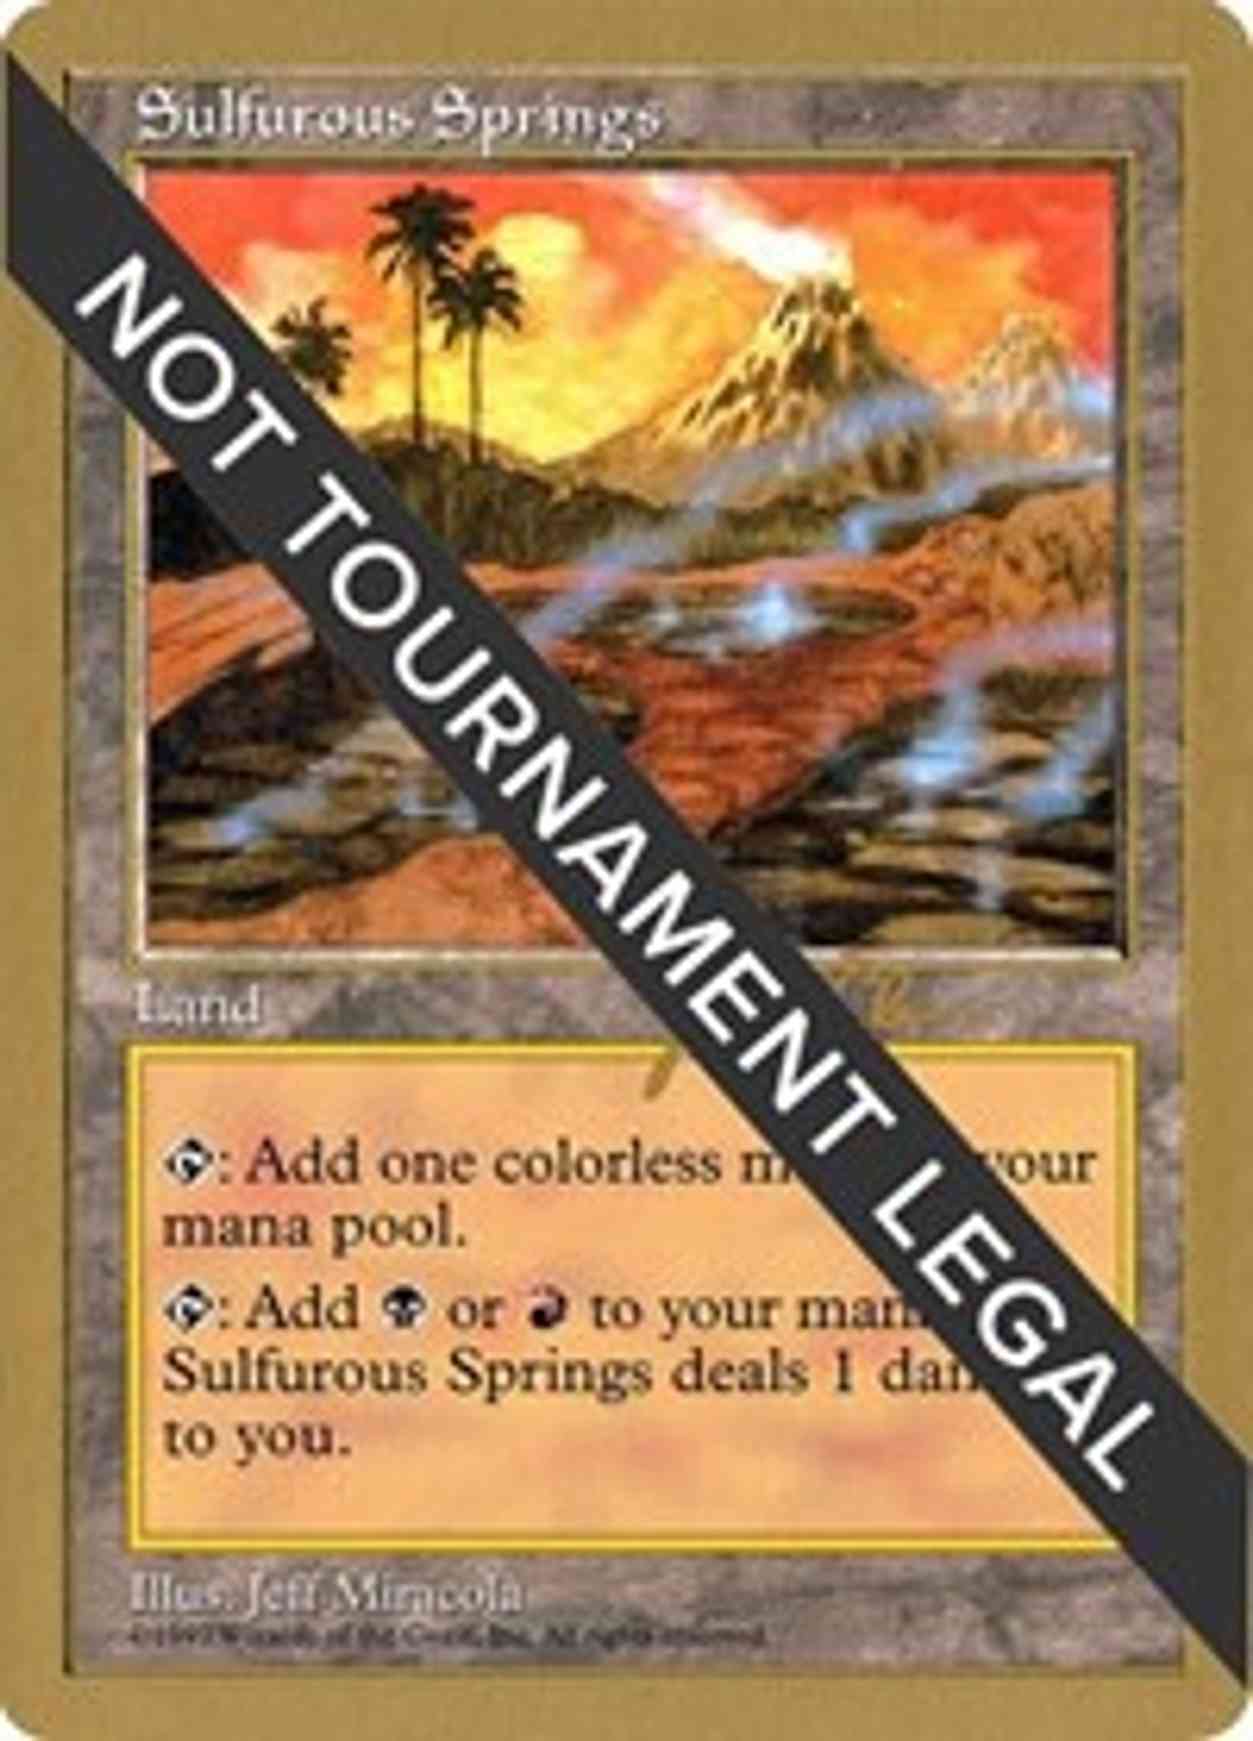 Sulfurous Springs - 1997 Jakub Slemr (5ED) magic card front